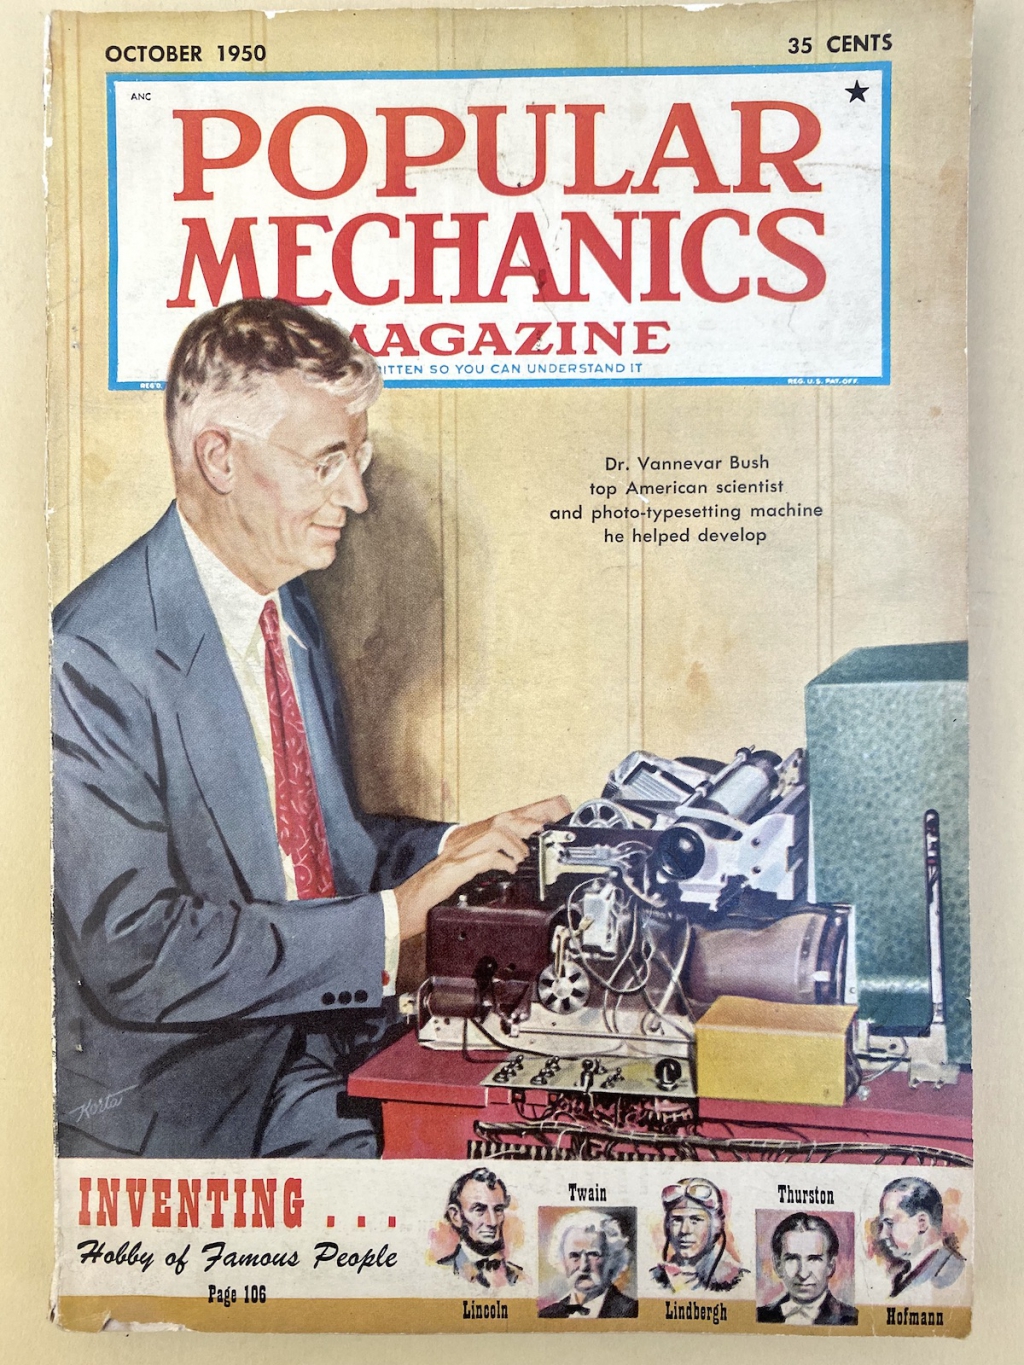 Vannevar Bush working with Samuel Caldwell's computer on cover of Popular Mechanics